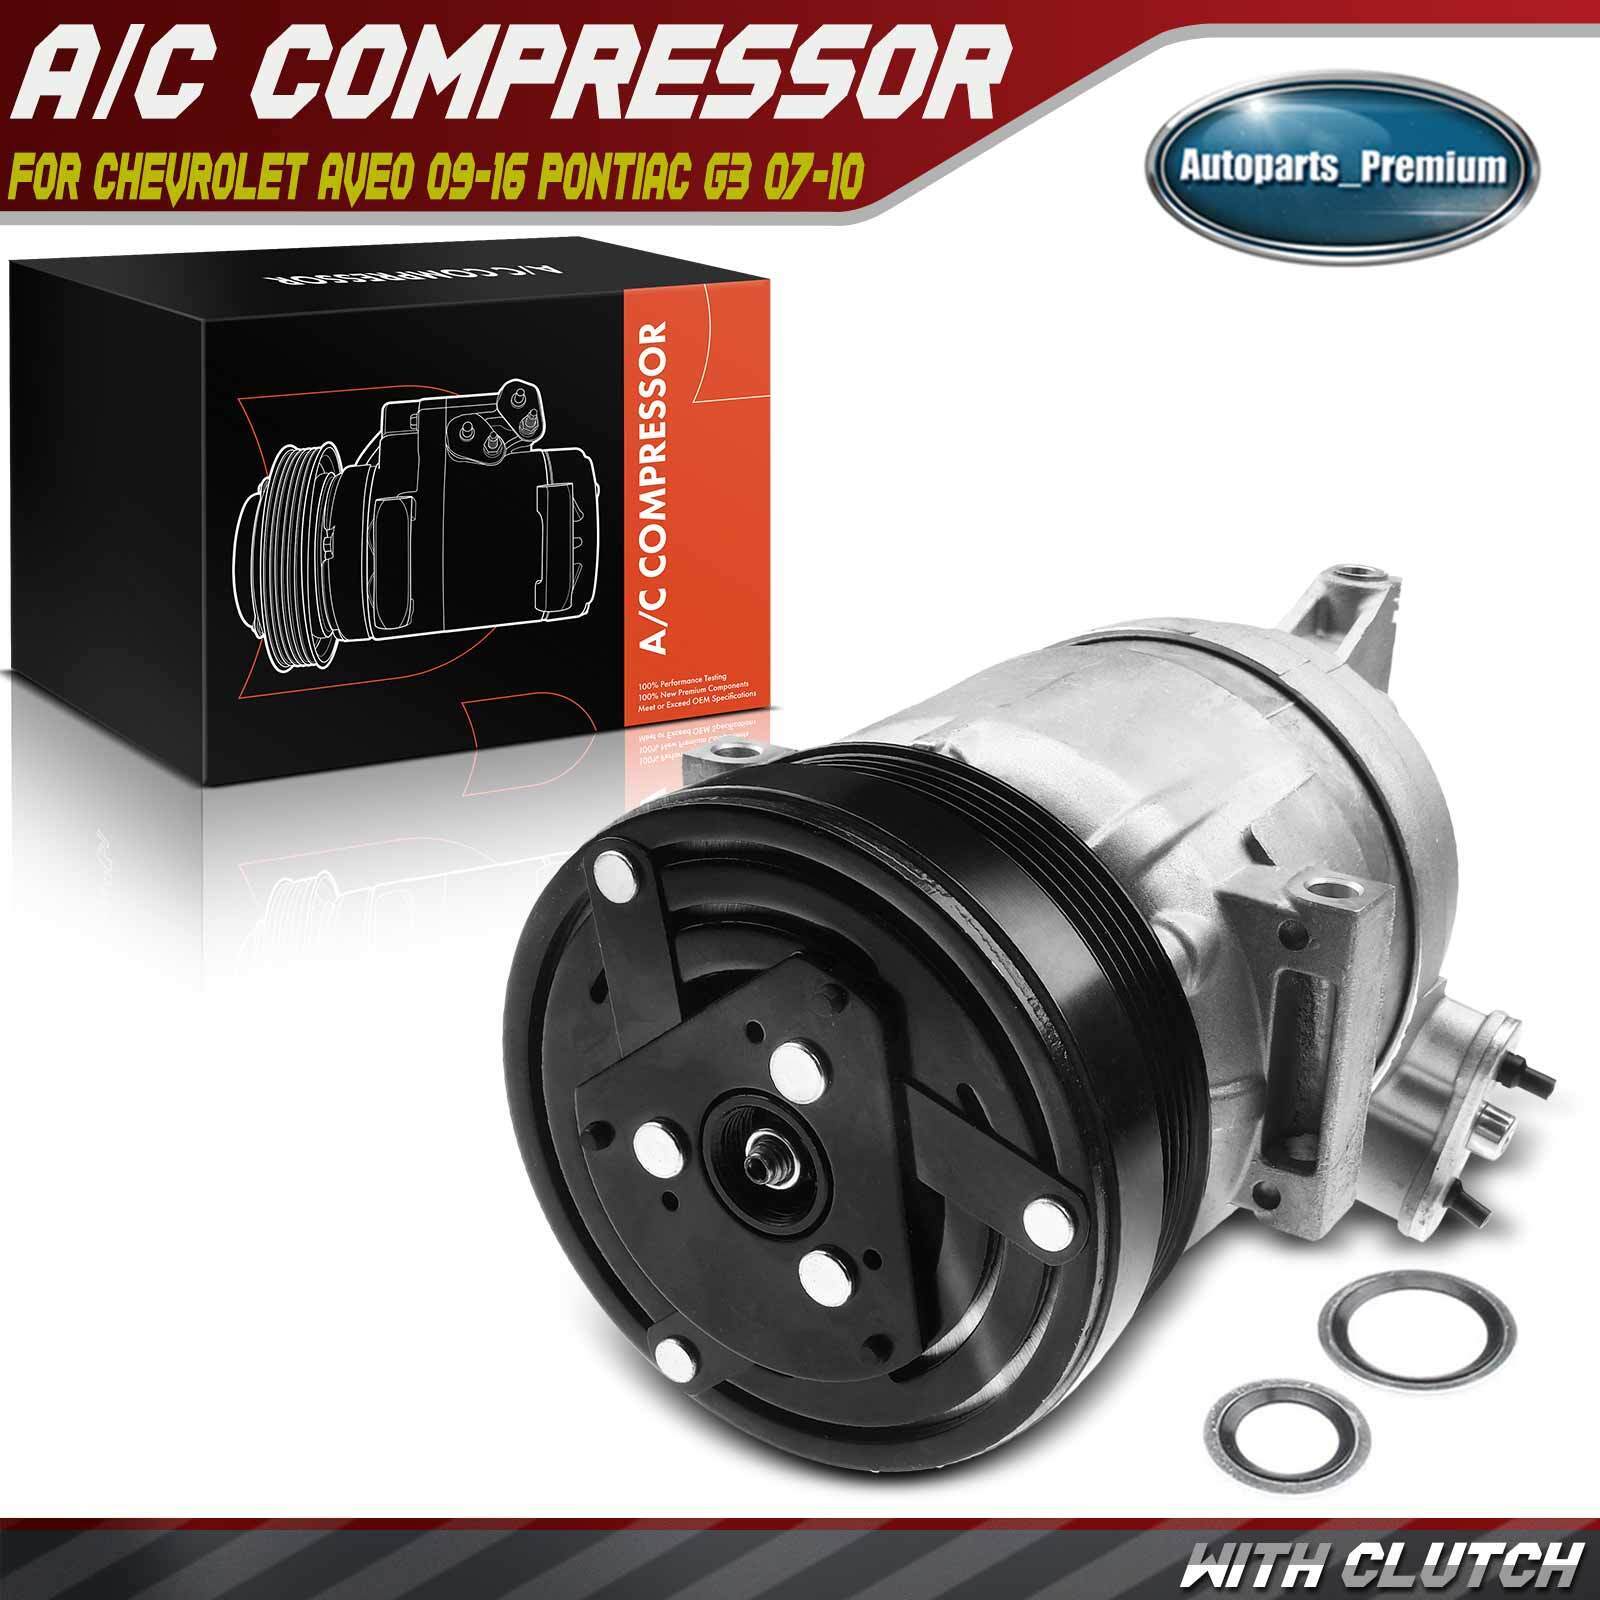 New AC Compressor w/ Clutch for Chevrolet Aveo 2009-2016 Pontiac G3 07-10 1.6L